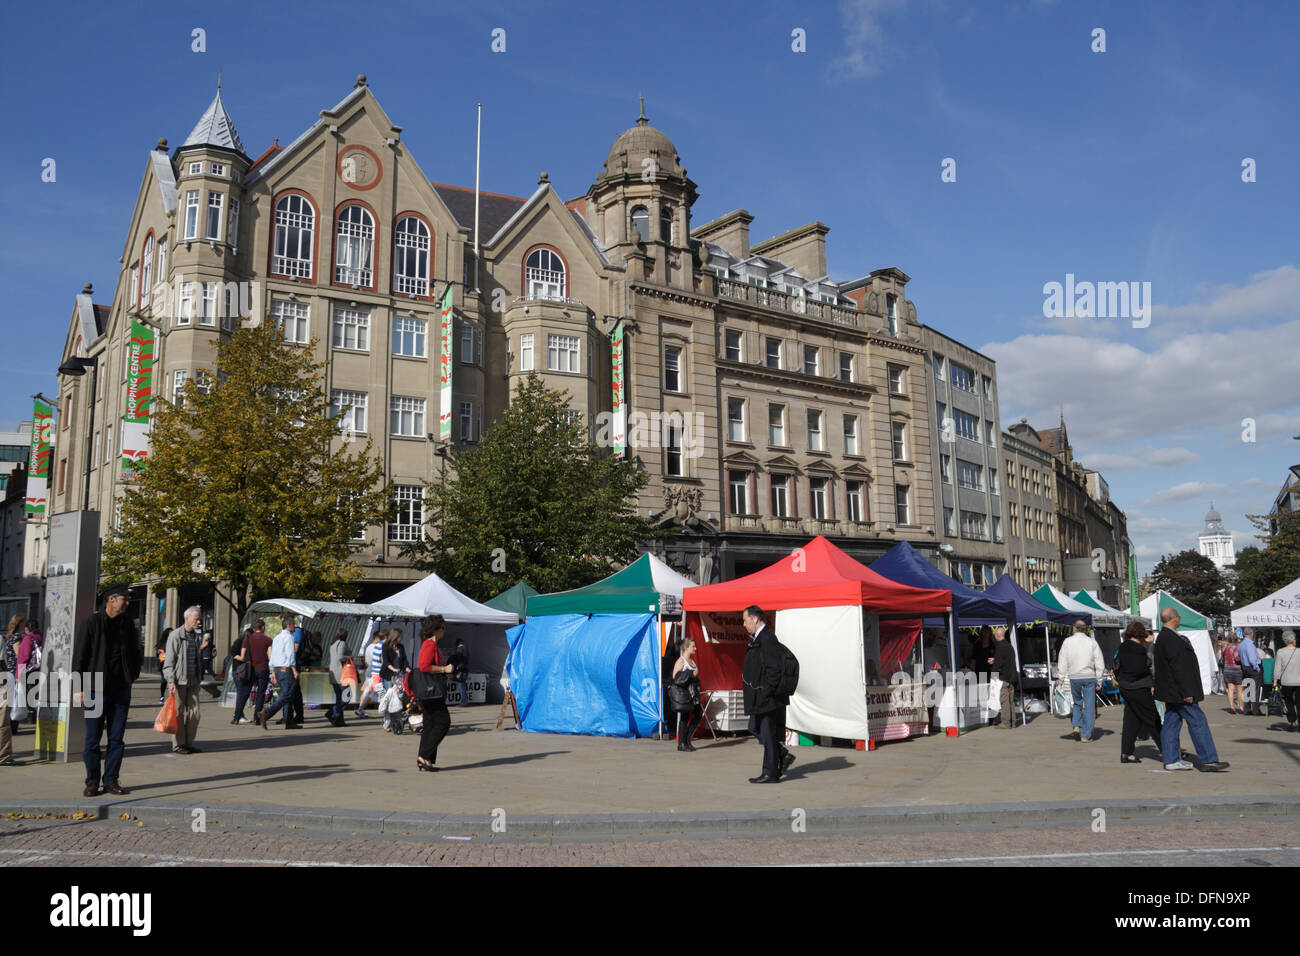 Market stalls on Fargate,  Sheffield City centre Stock Photo